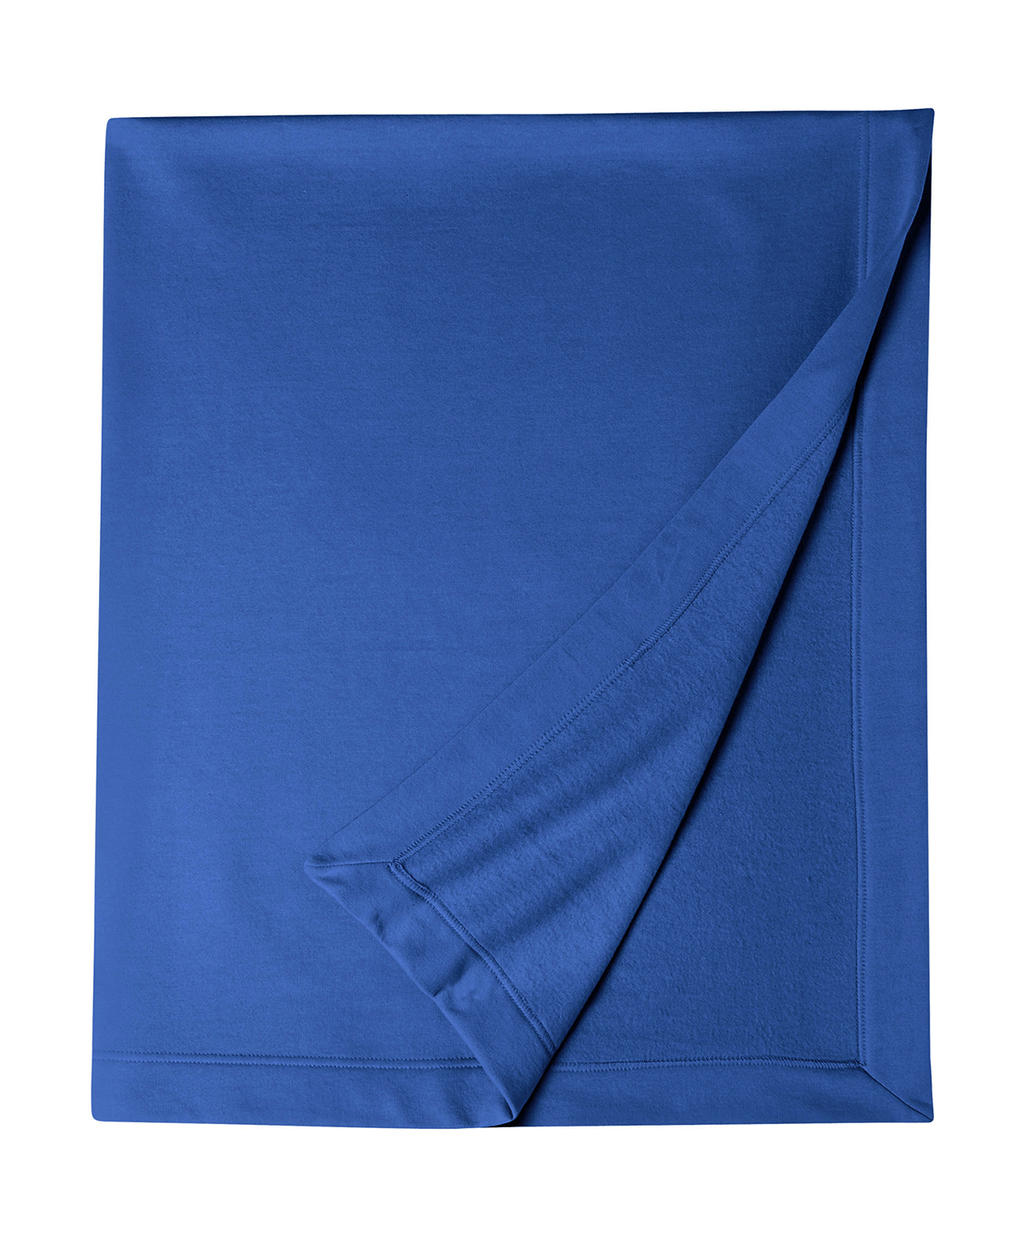 001.09 / DryBlend® Fleece Stadium Blanket / Royal